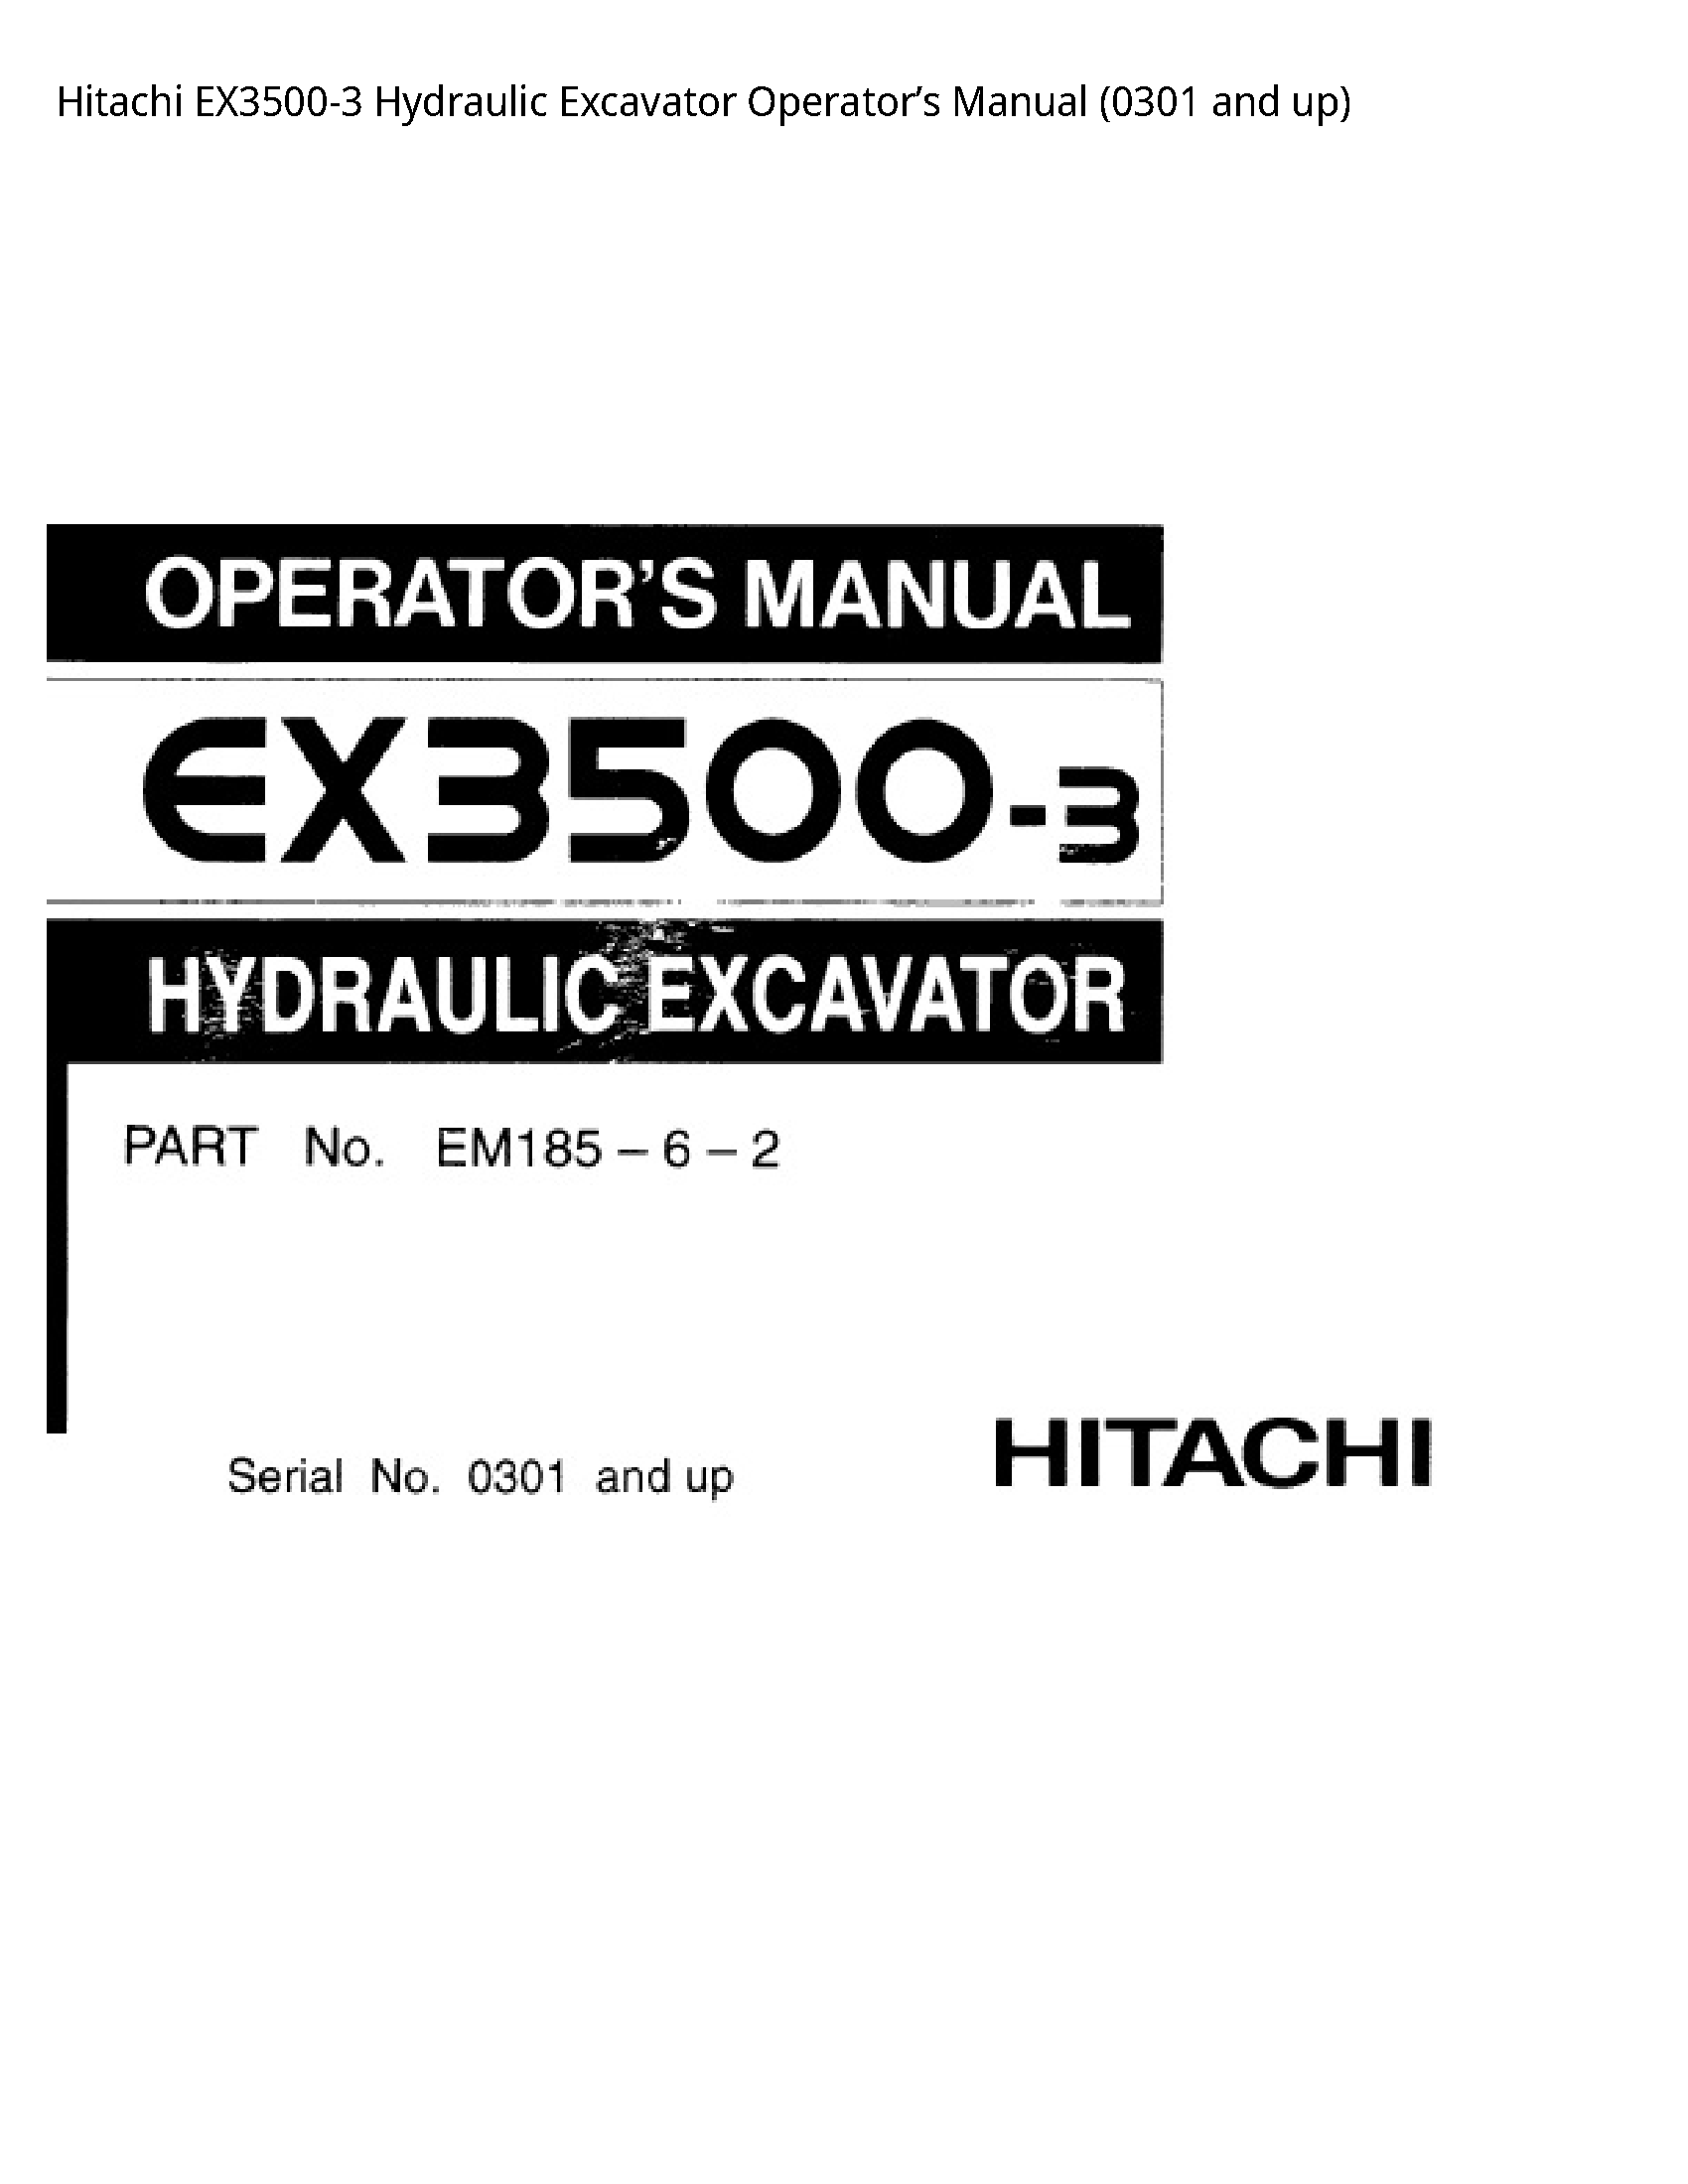 Hitachi EX3500-3 Hydraulic Excavator Operator’s manual